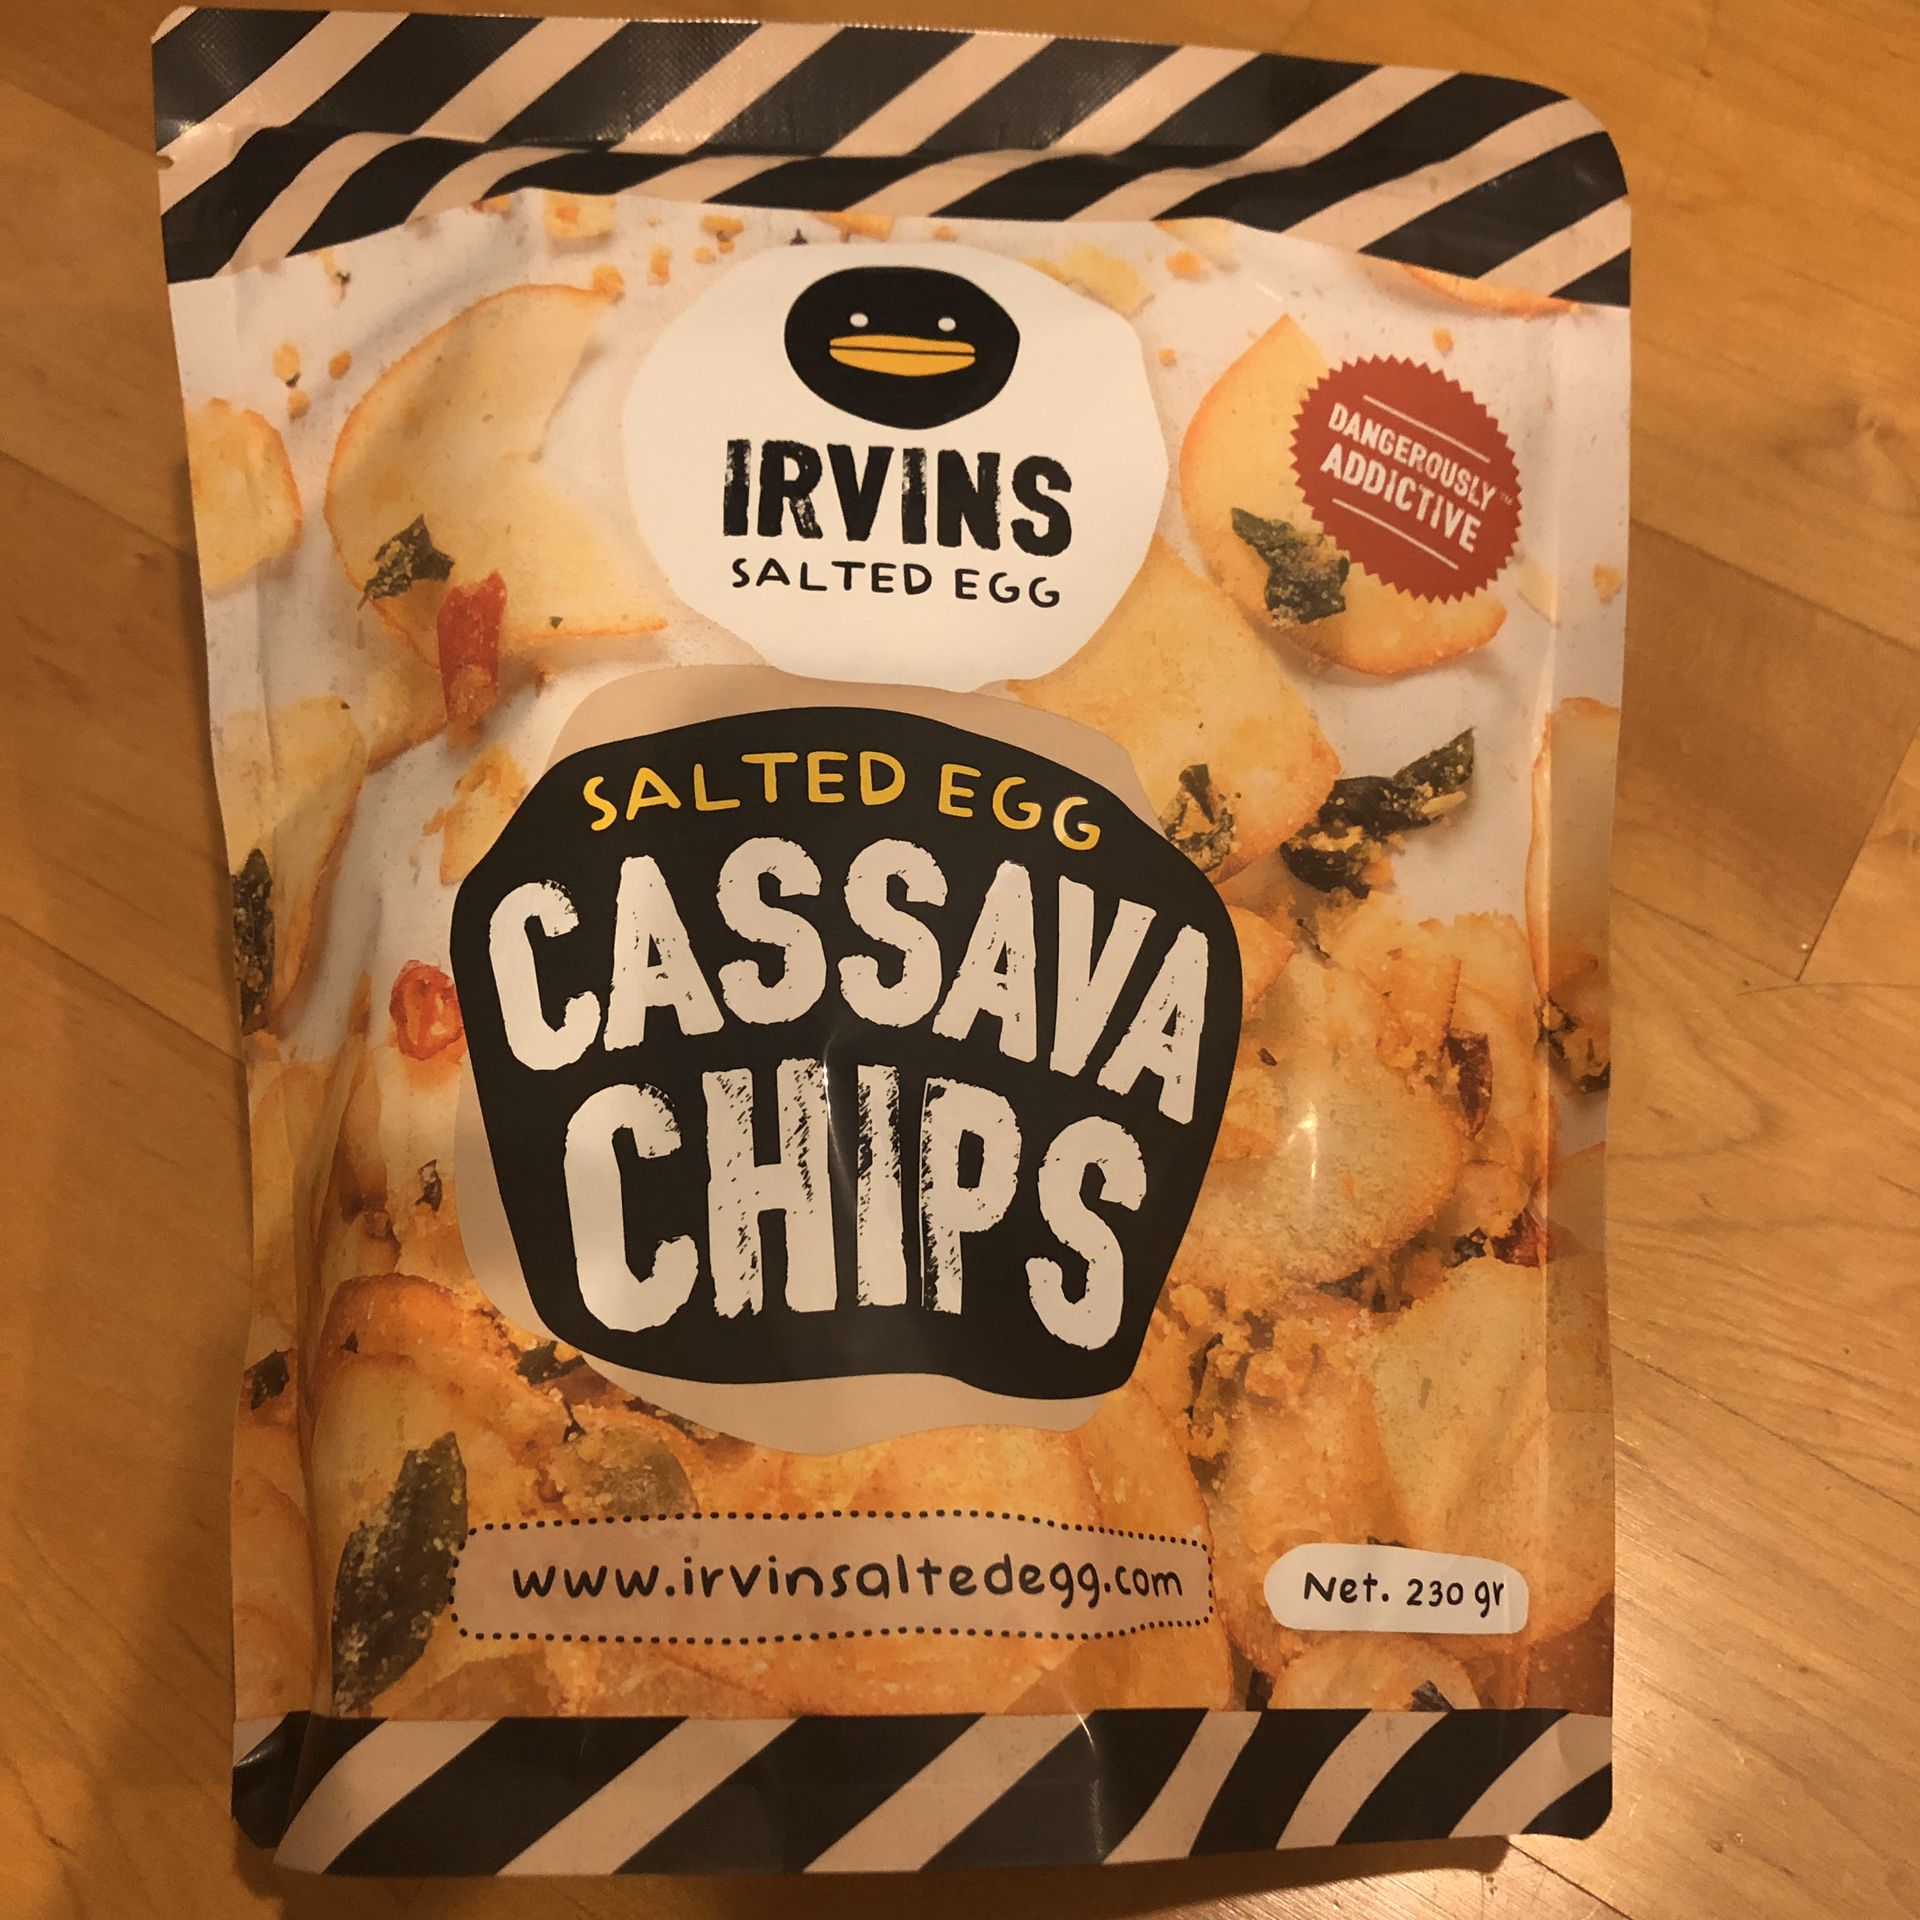 Irvins Salted Egg Cassava Chips (230g - Large)